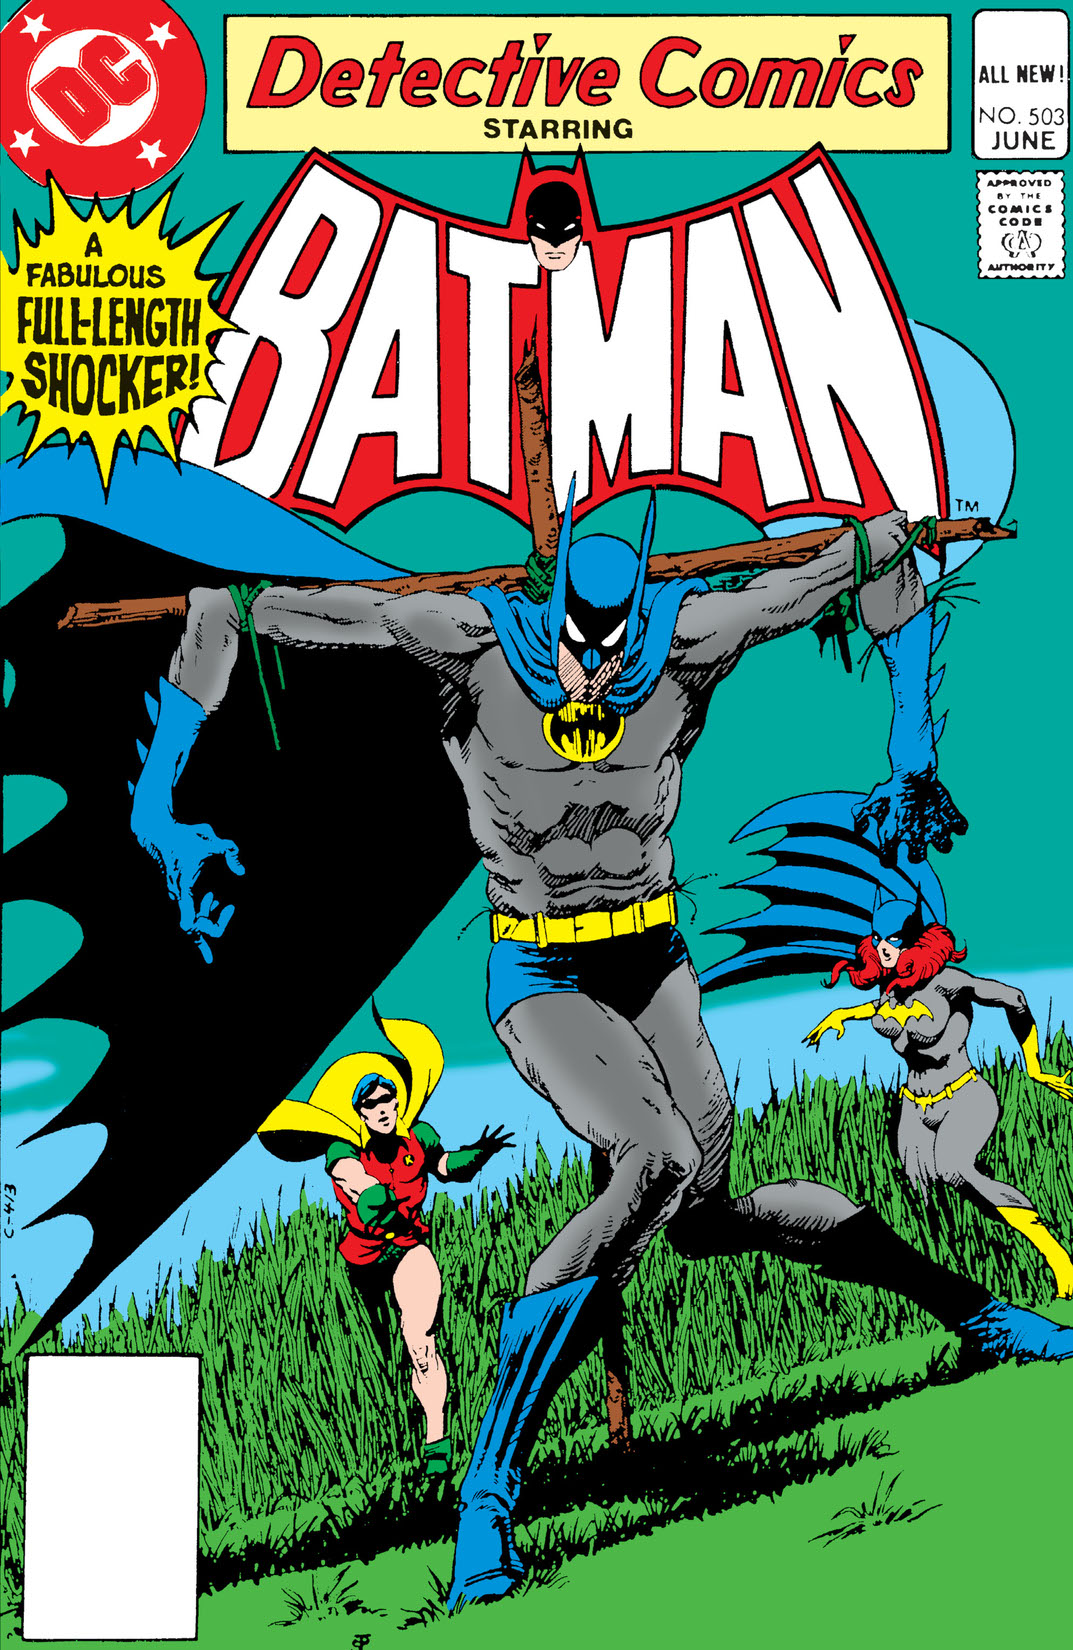 Detective Comics (1937-) #503 preview images